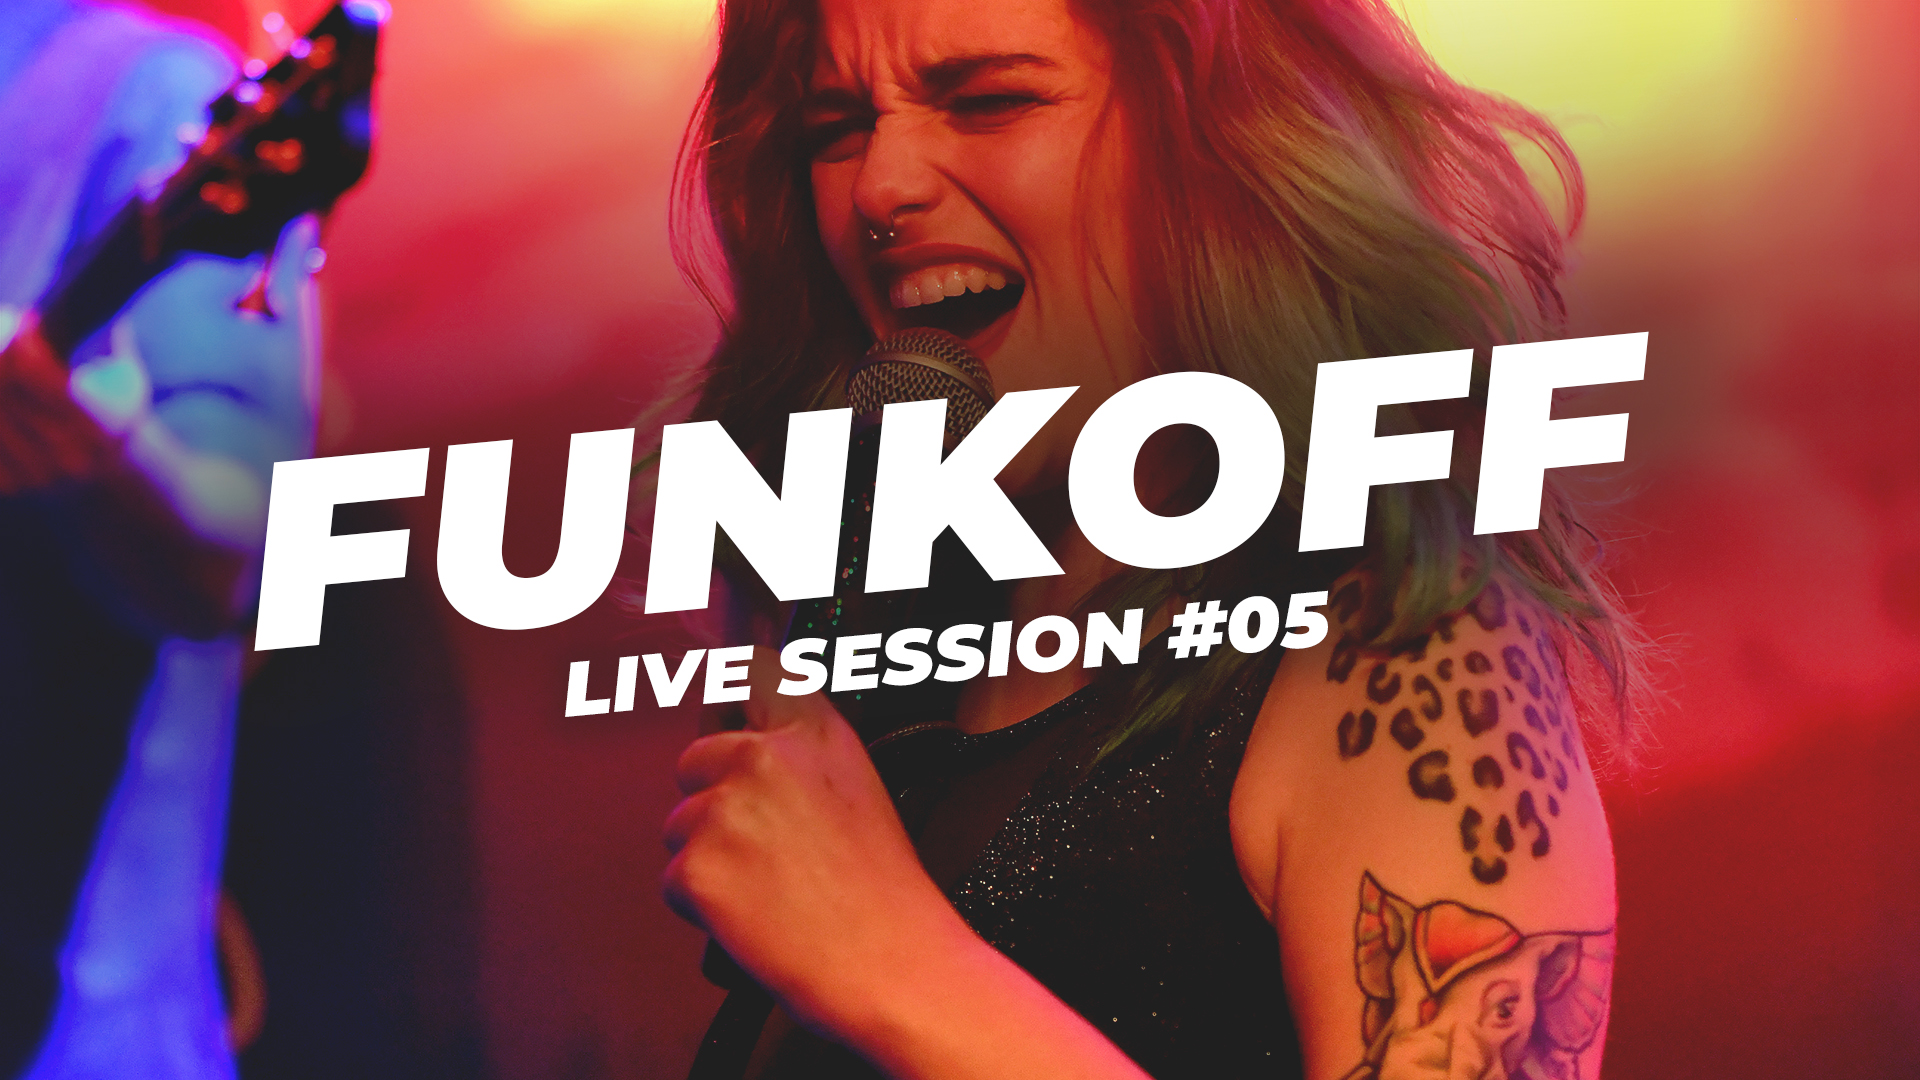 FUNKOFF LIVE SESSION #05